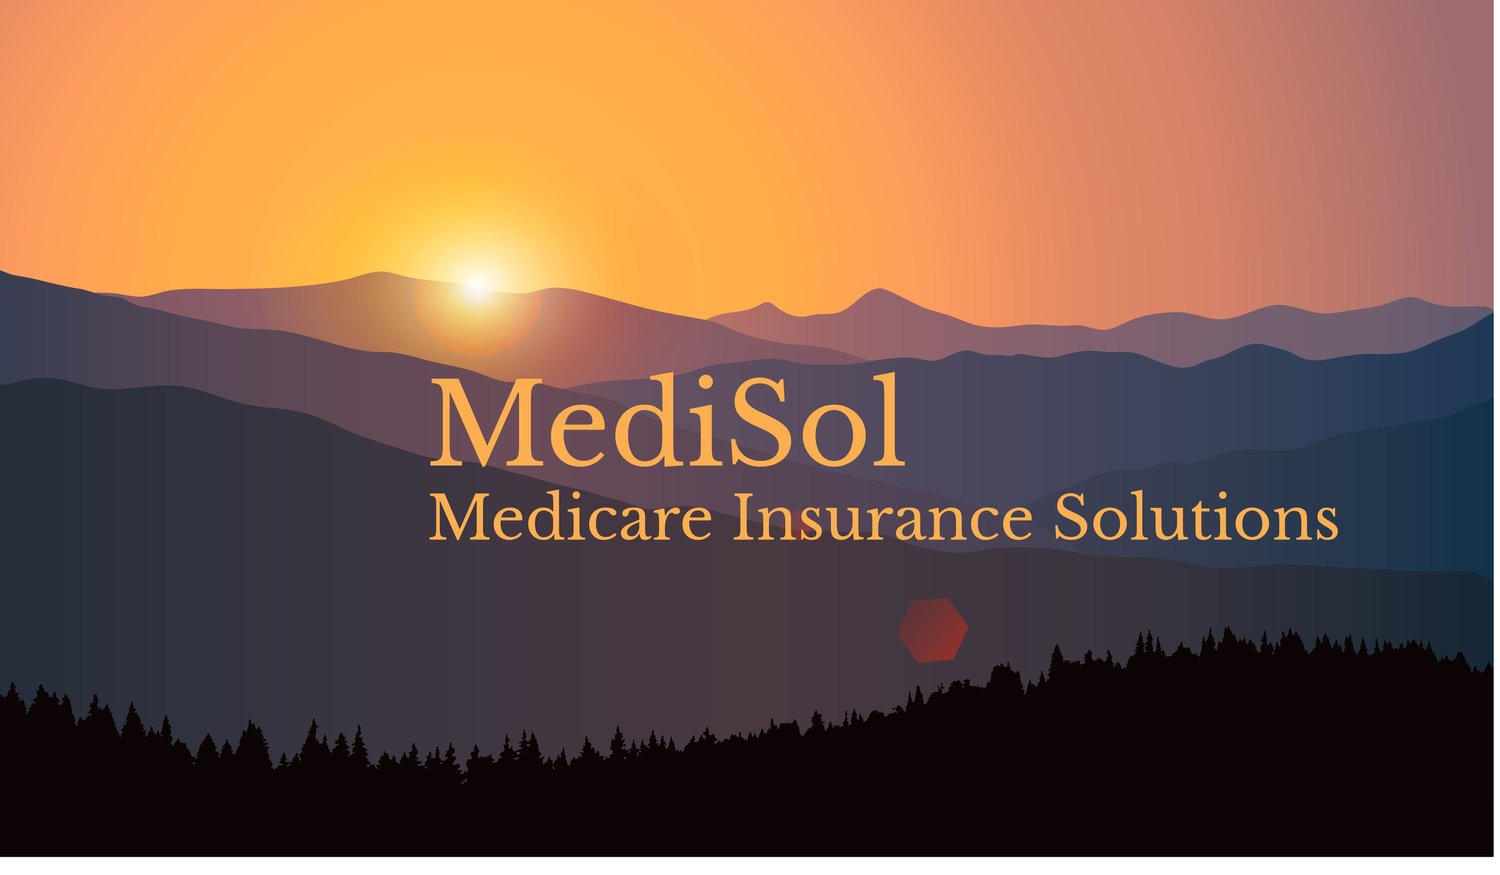 MediSolMedicare.com